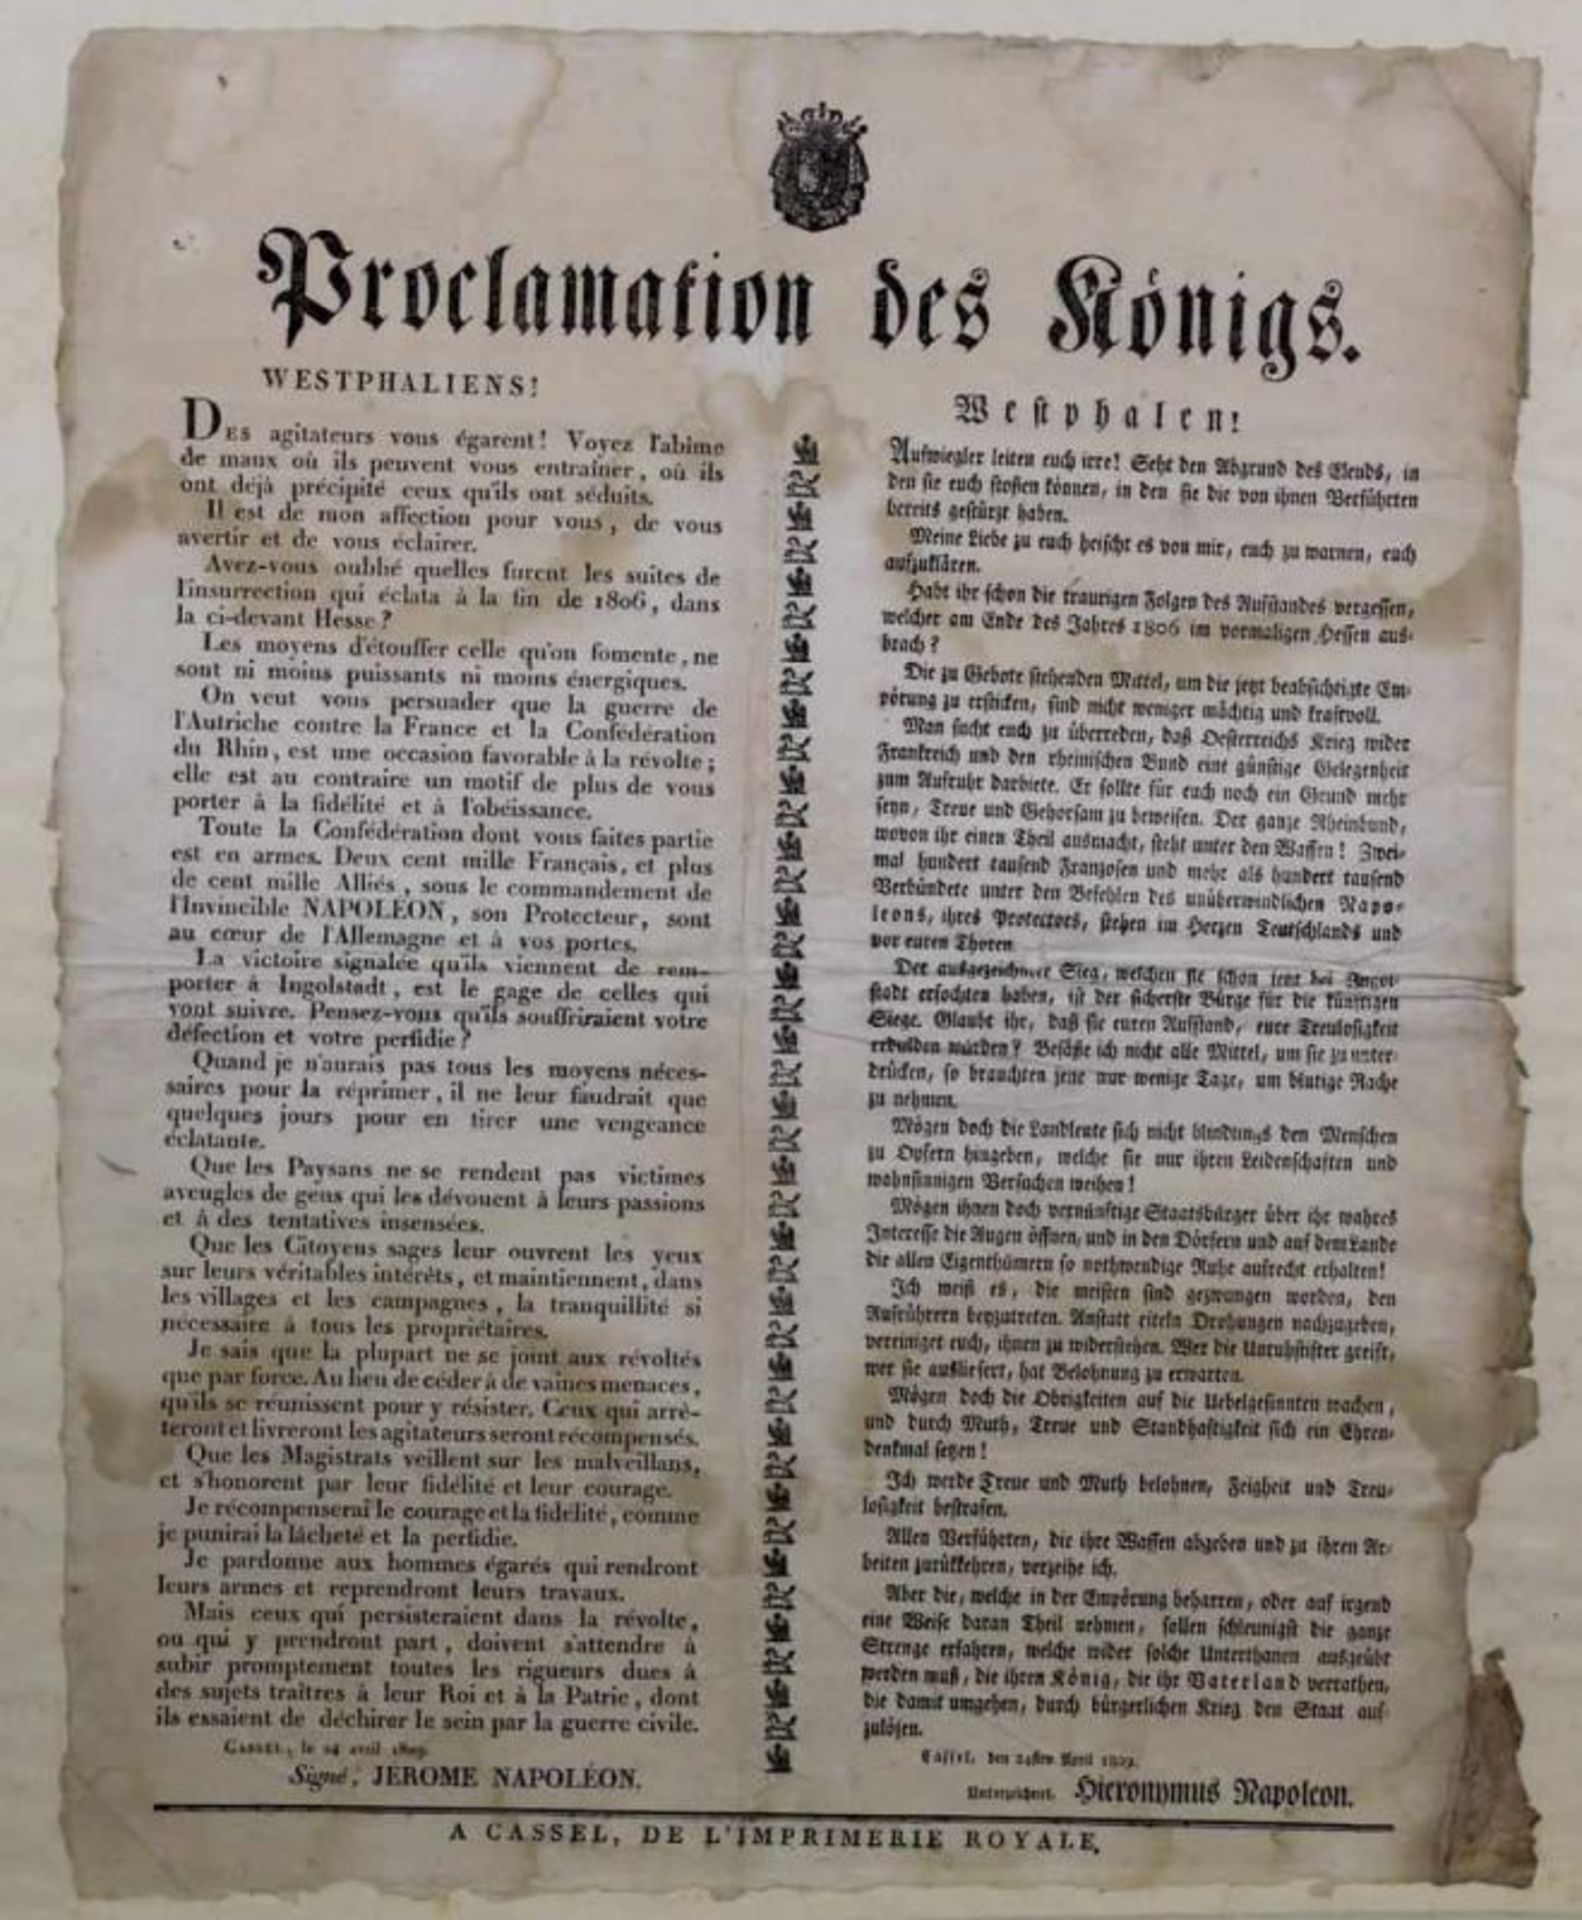 Proklamationsaushang des Königs Jérôme Napoleon, König von Westphalen, Kassel 1809, 53 x 40 cm, im